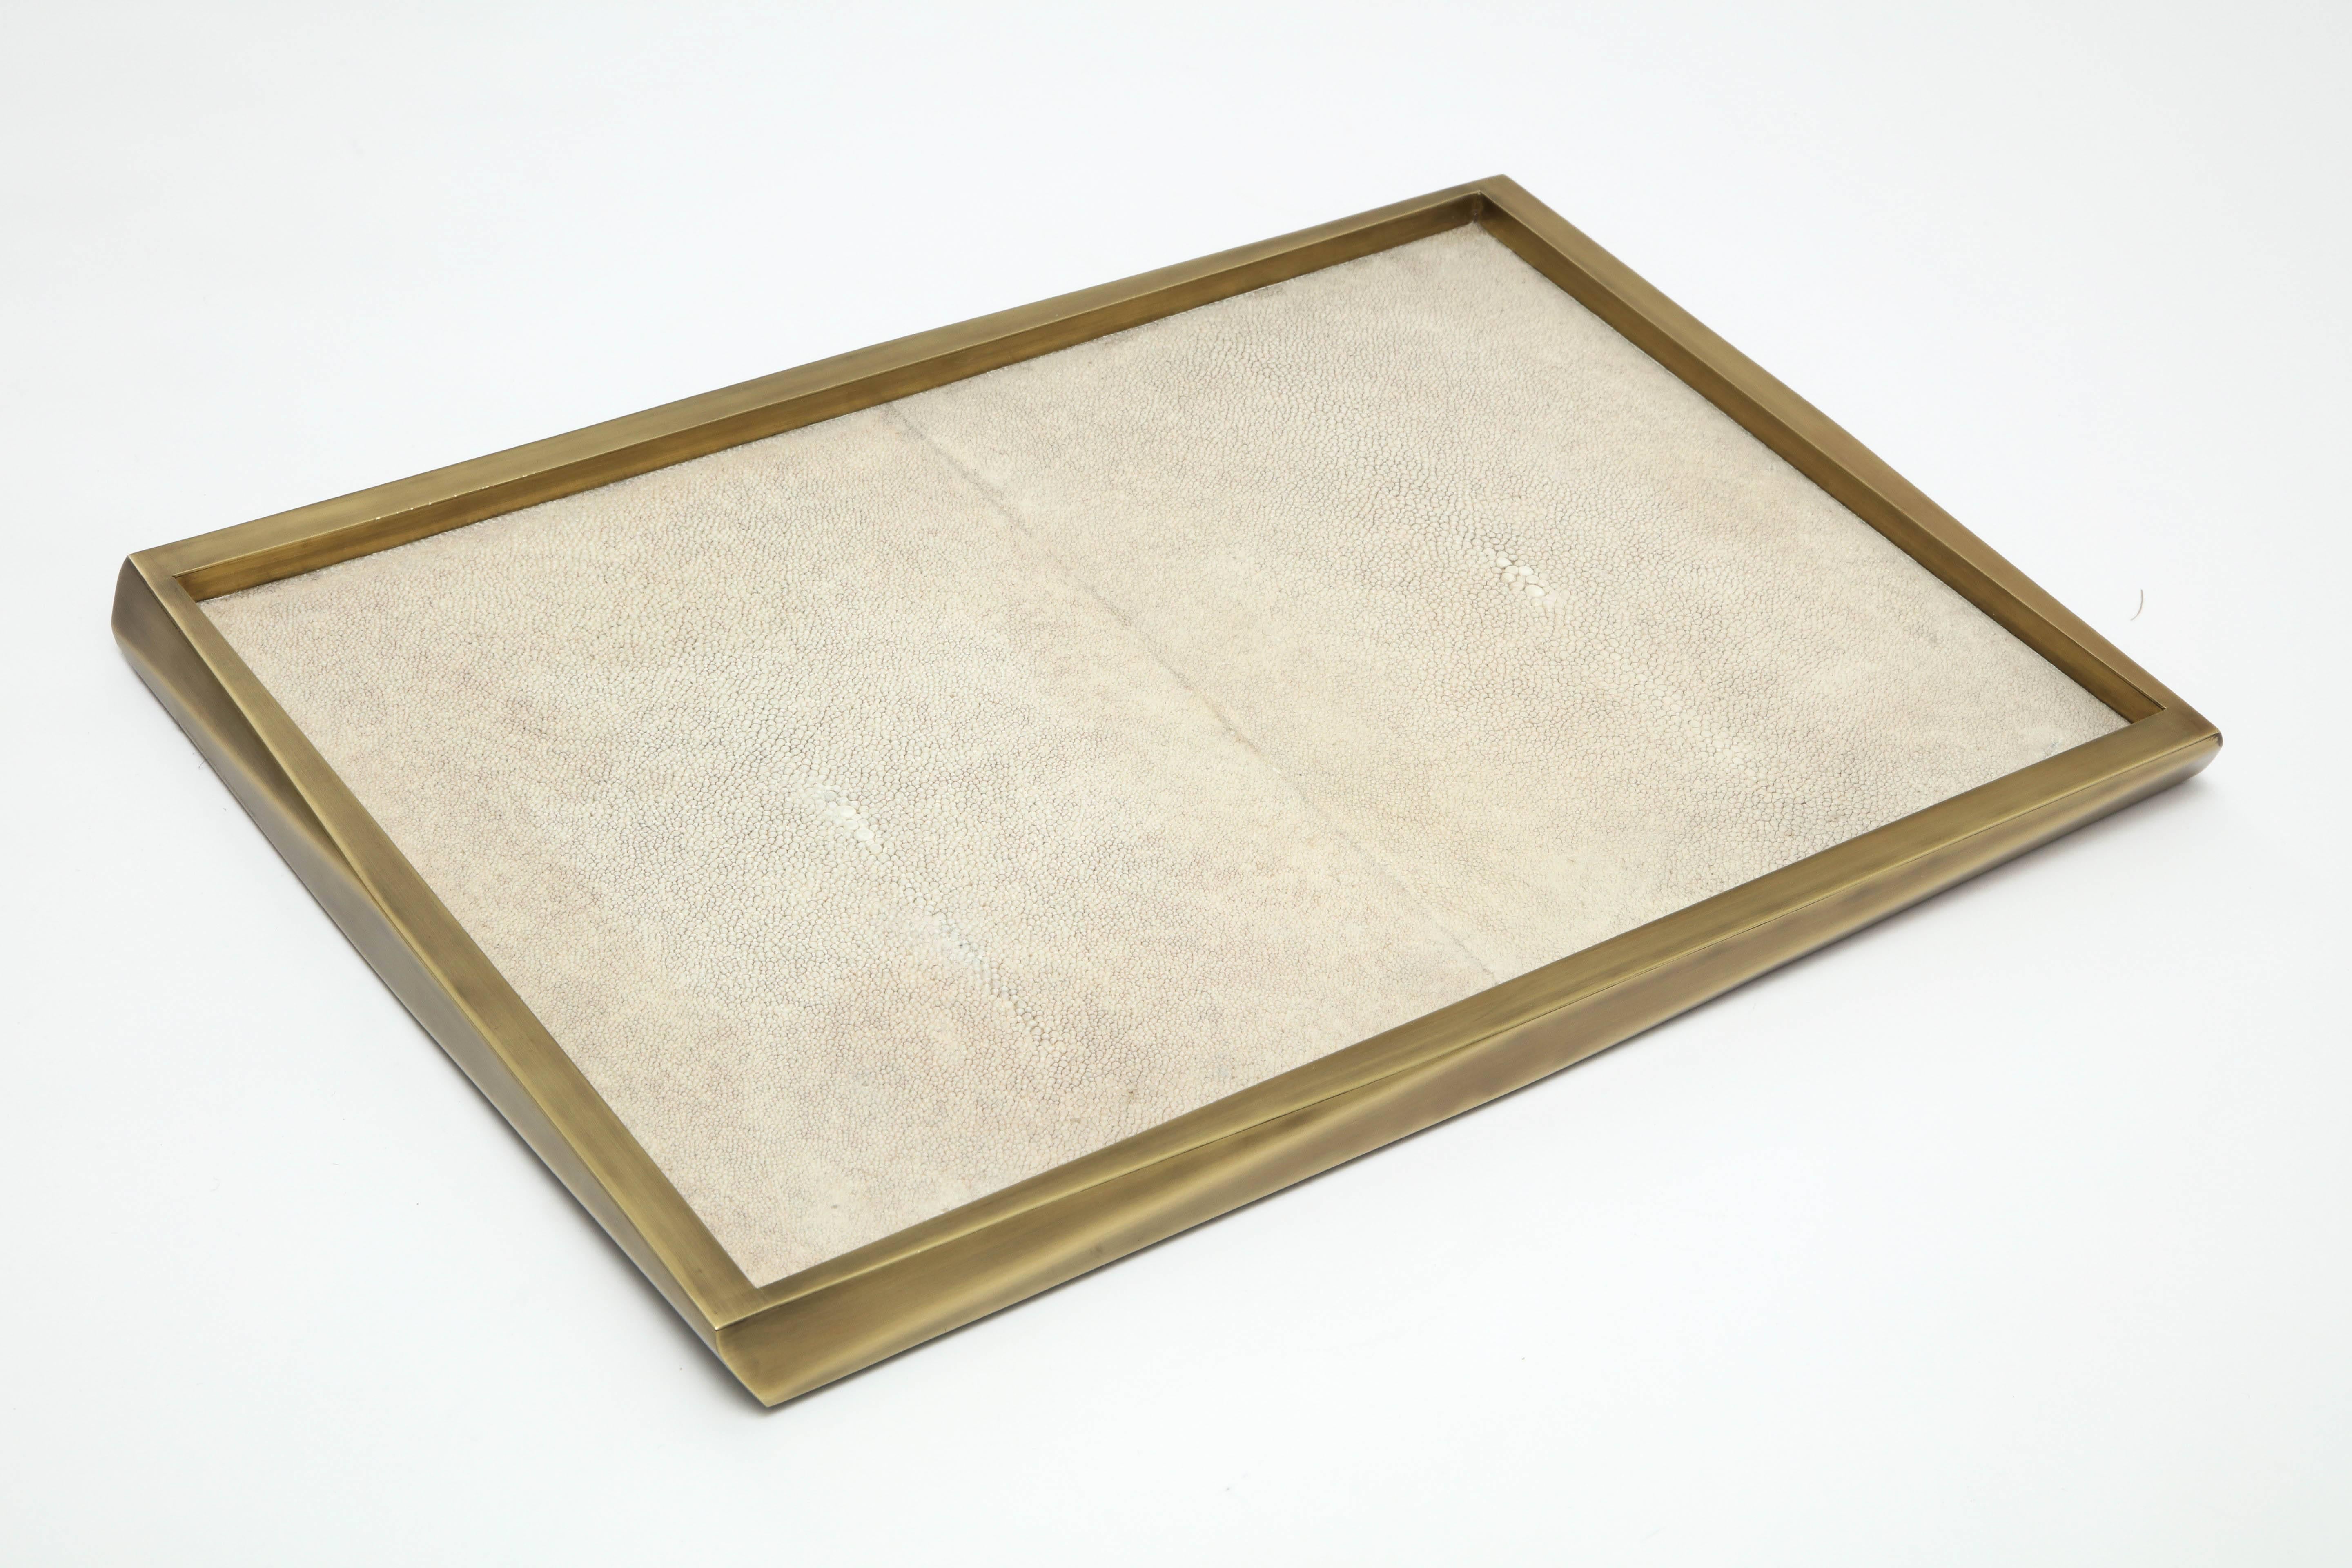 Cream colored shagreen tray with bronze border.